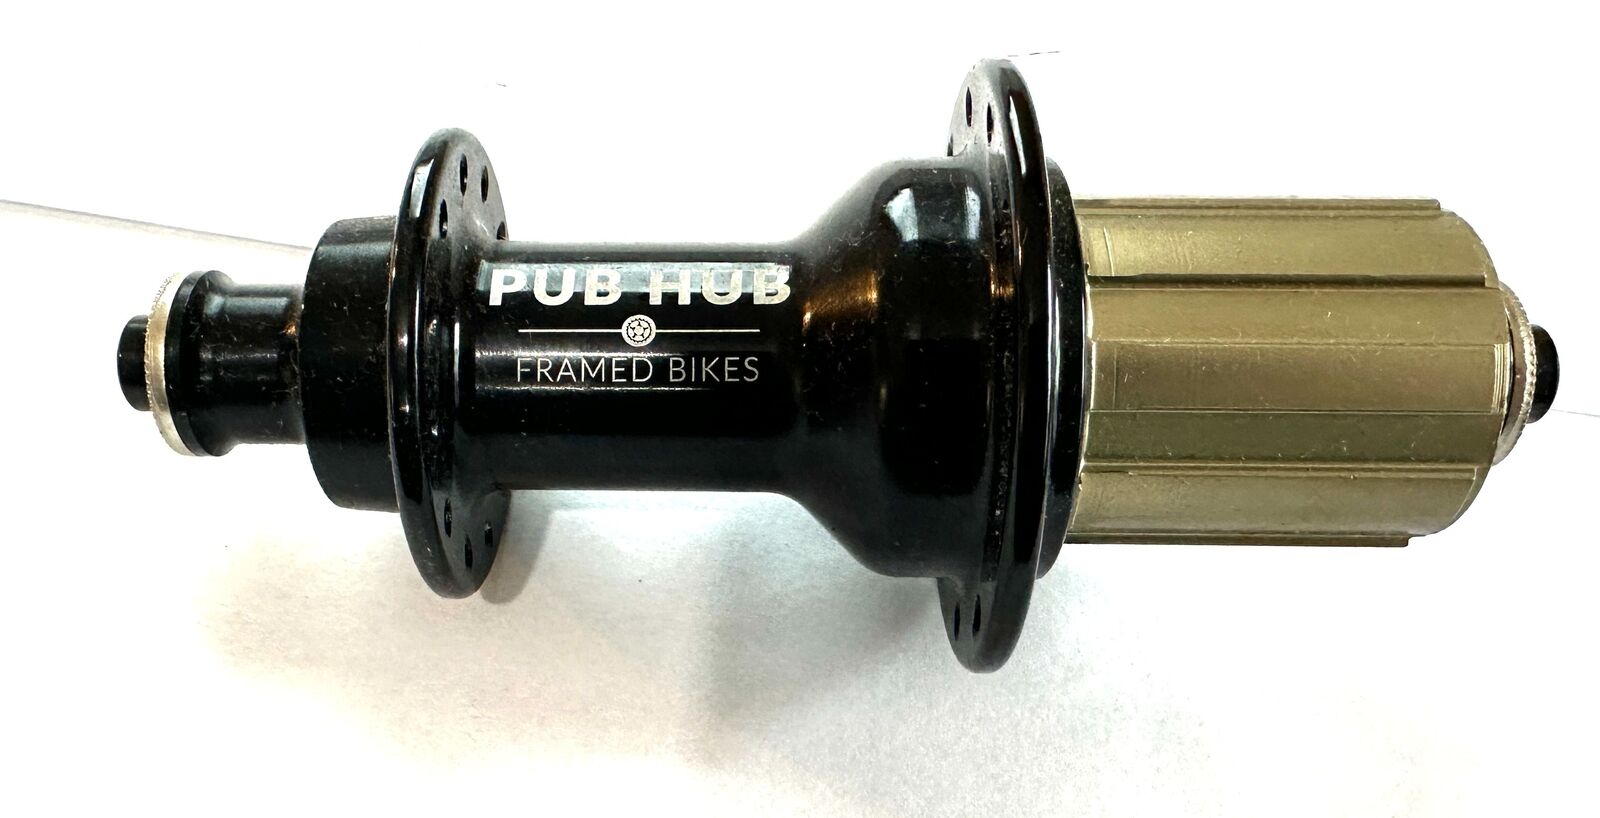 Rear Bike PUB HUB Framed 130mm 24h Fit SHIMANO HG Cassette QR Sealed Bearing New